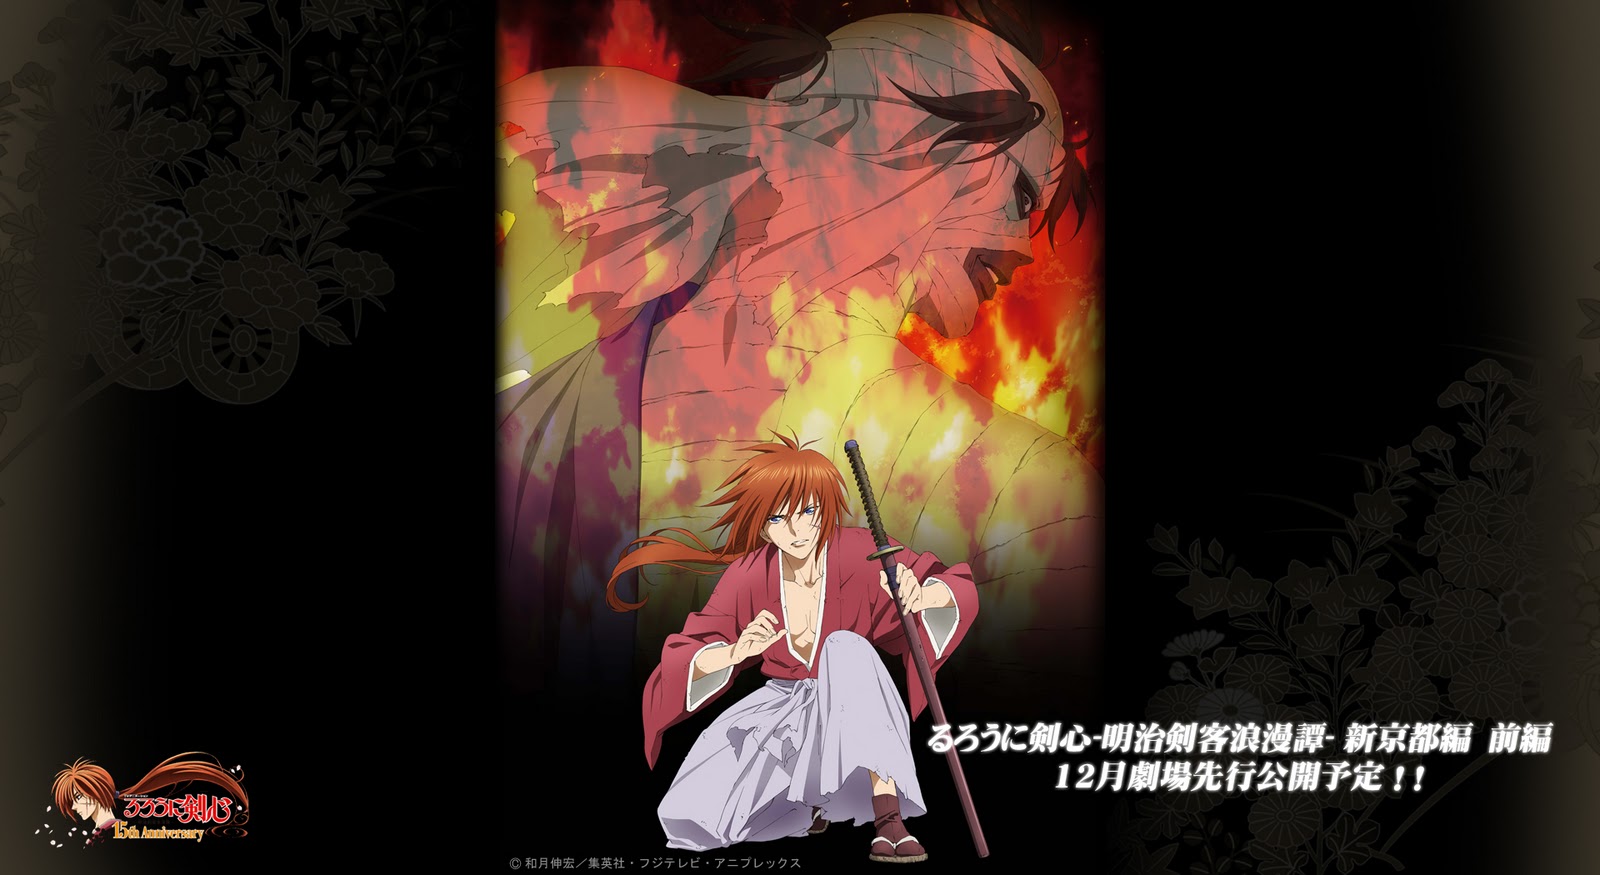 Hunters Guild Org Kaji S Blog New Pictures From New Rurouni Kenshin Anime 10 19 11